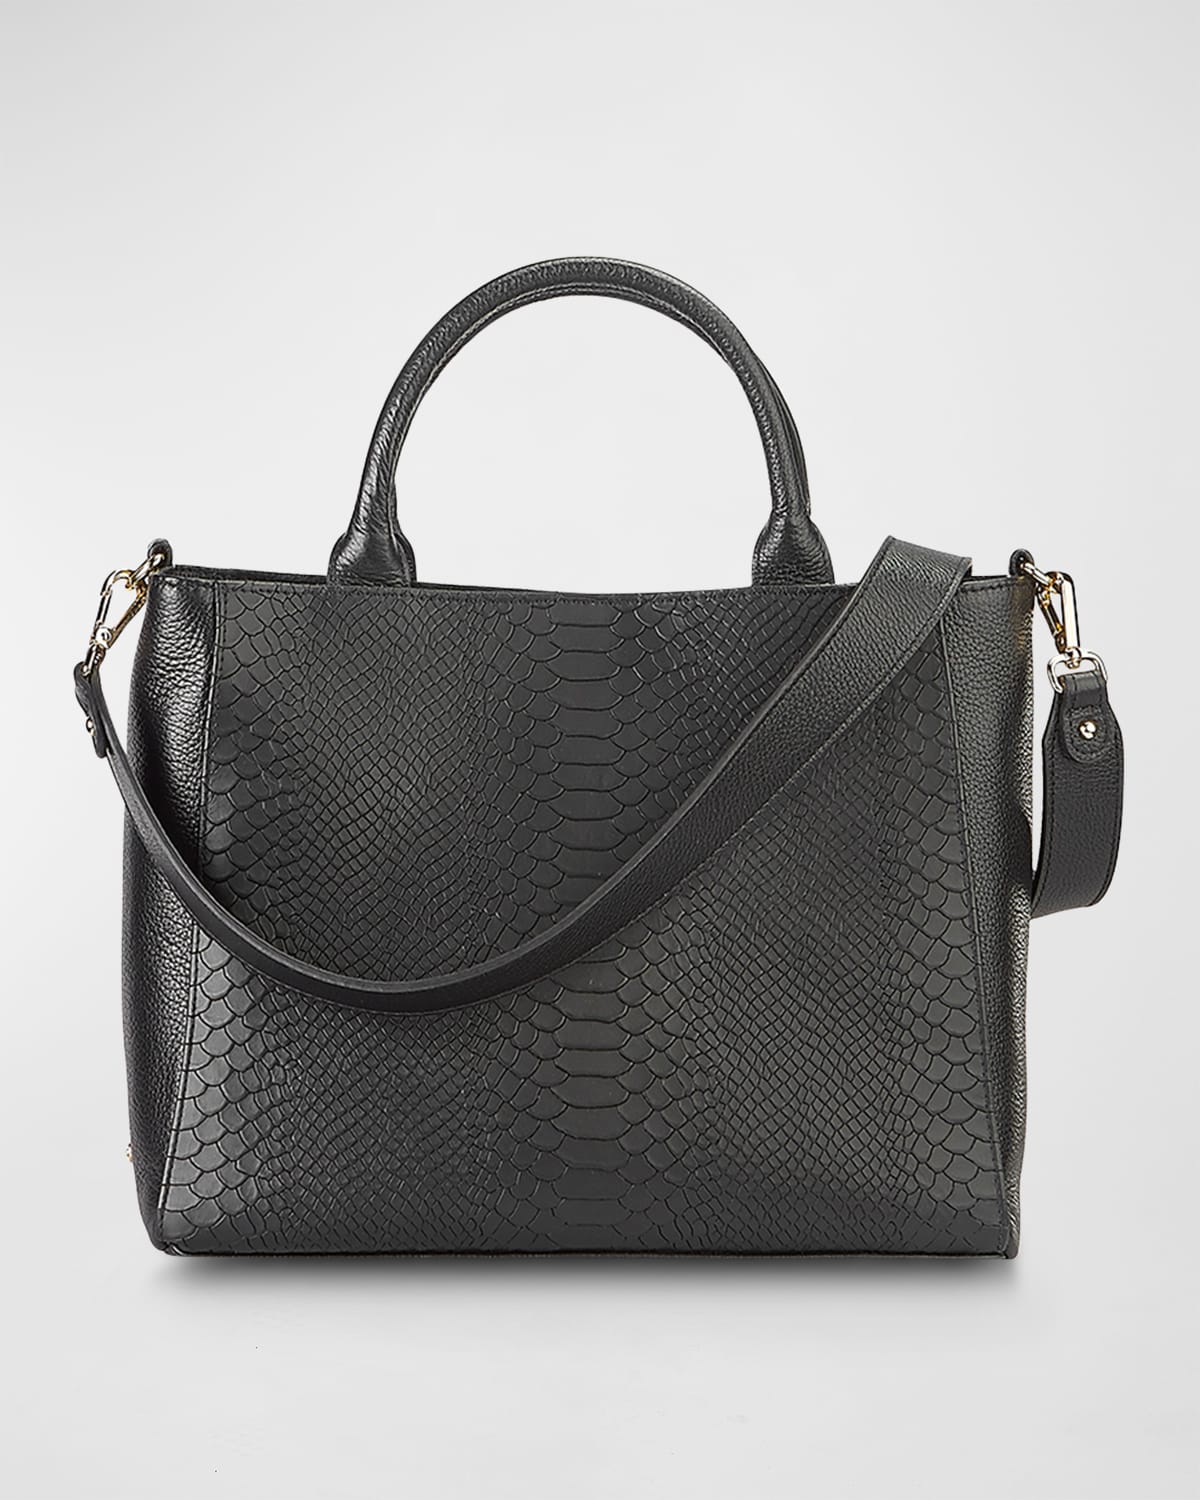 Gigi New York Hudson Python-Embossed Top-Handle Bag